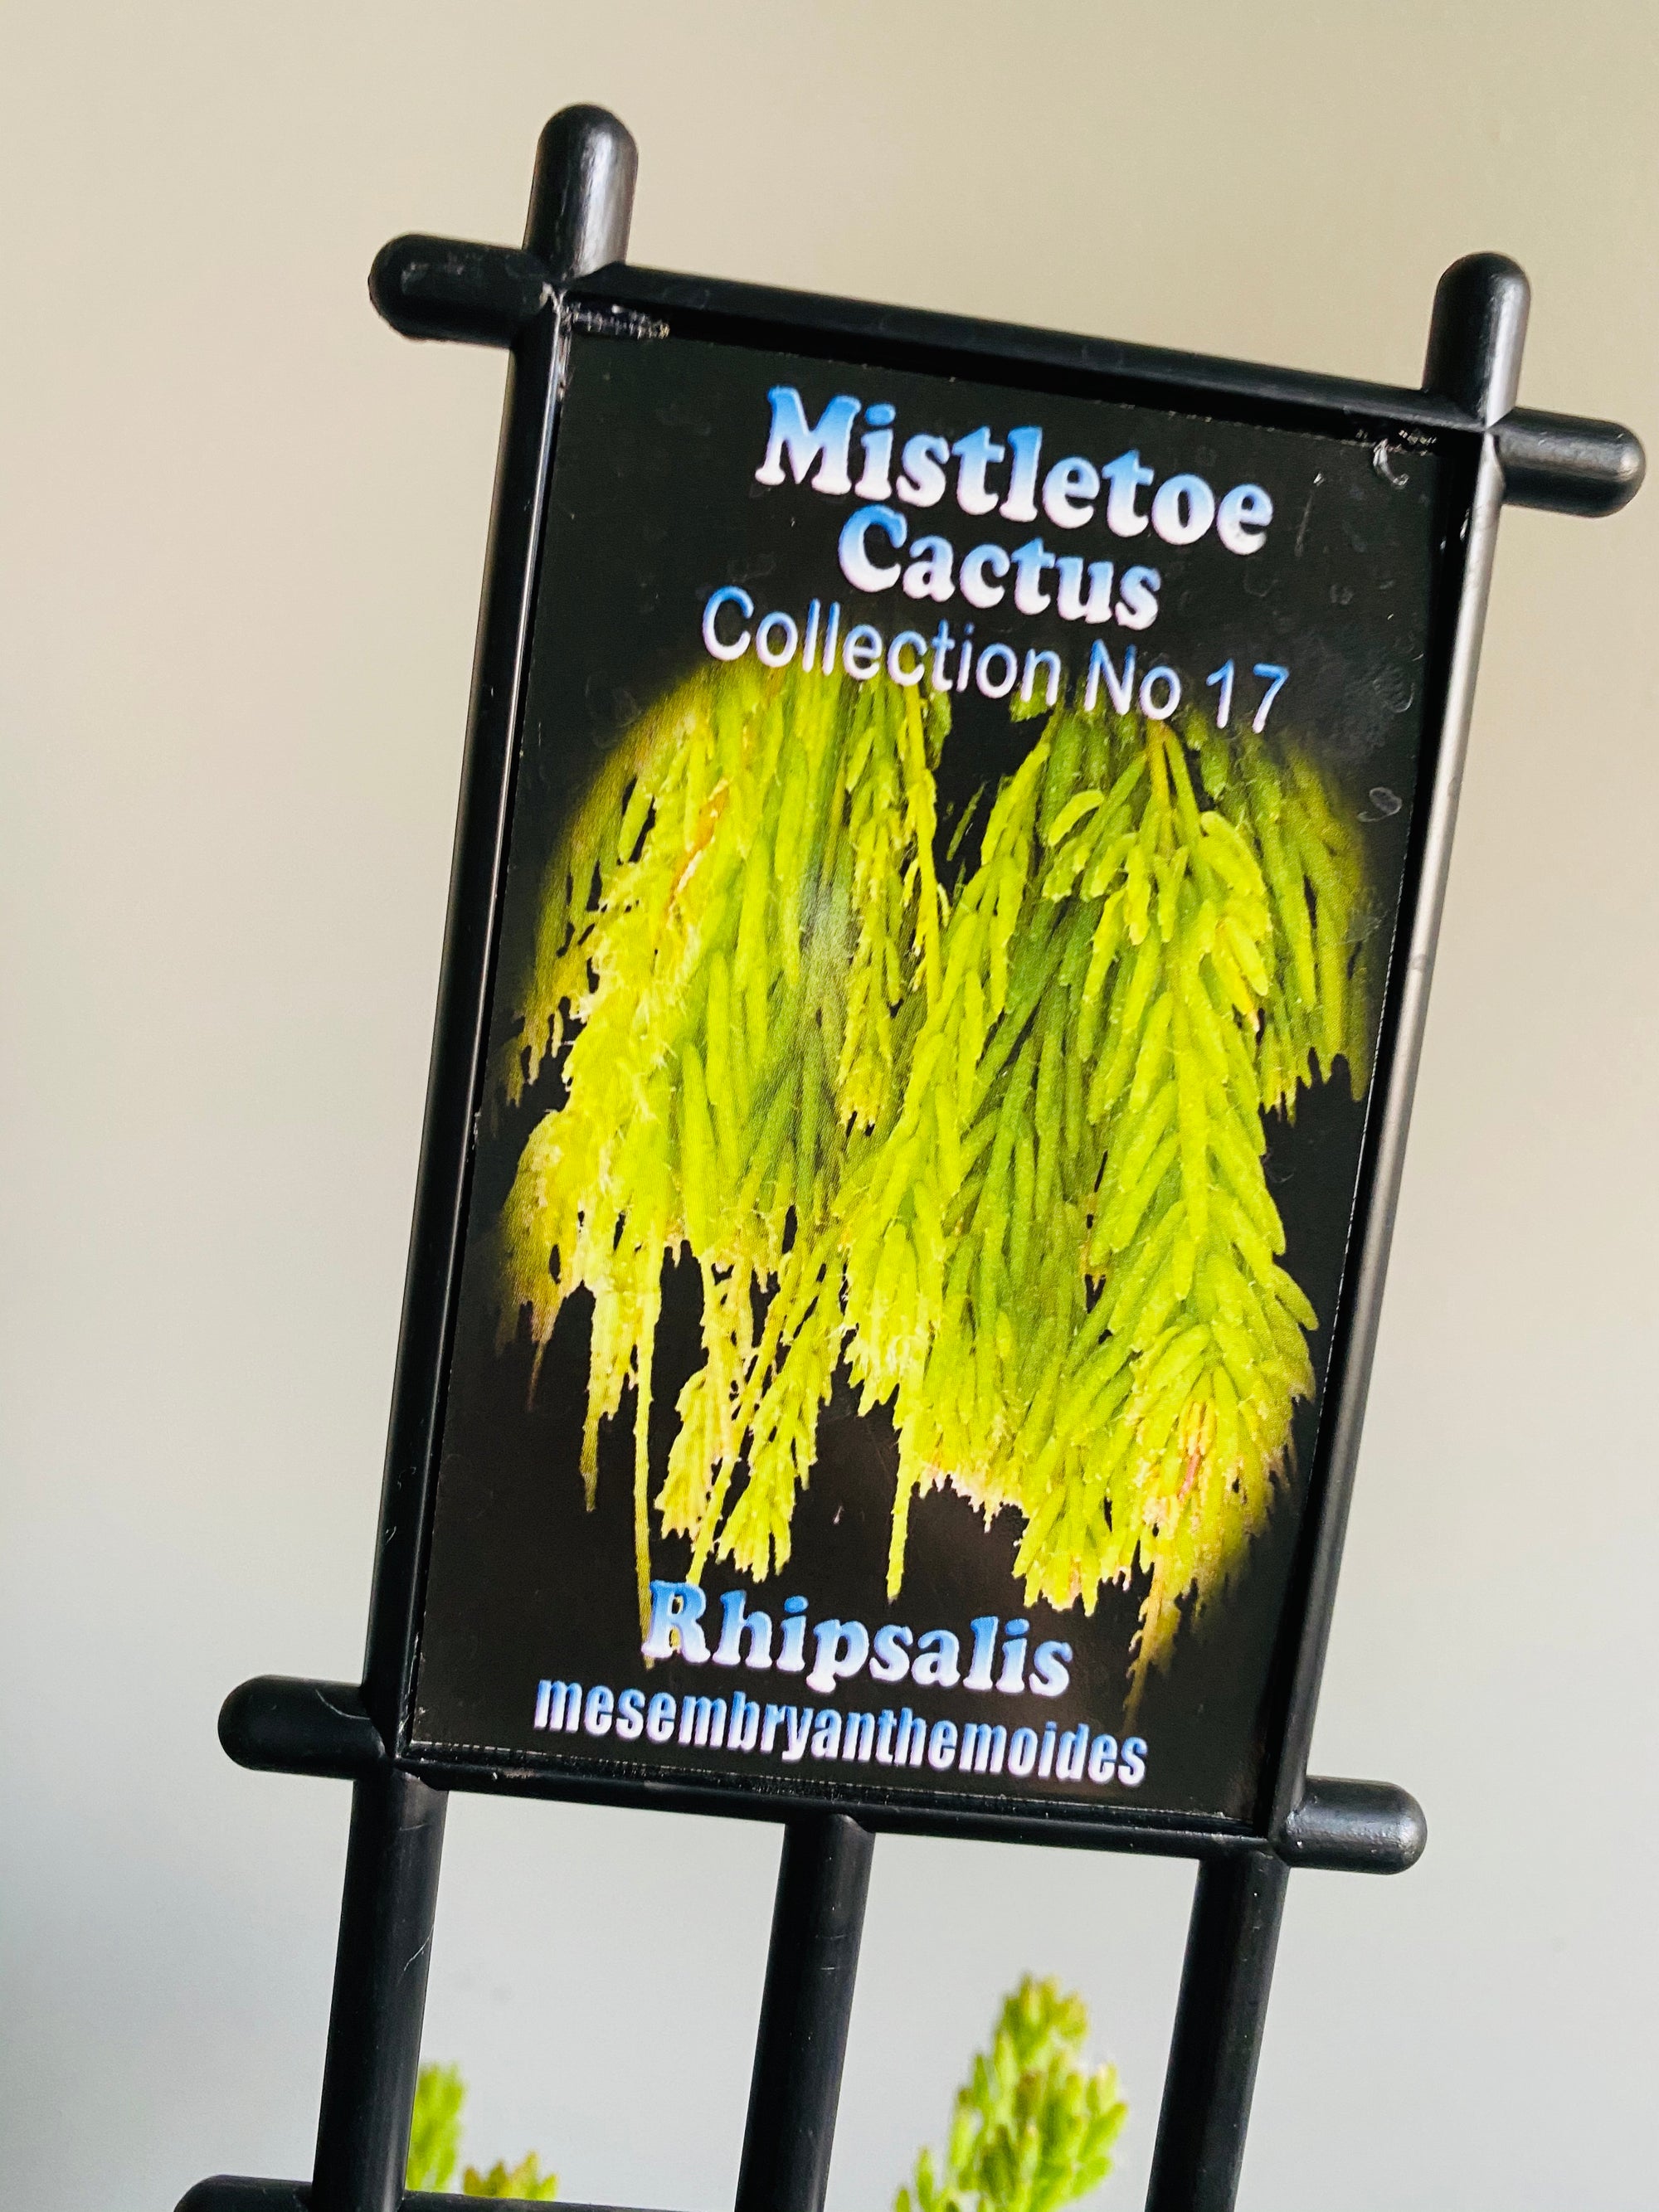 Rhipsalis Mesembryanthemoides - Mistletoe Cactus Collection No. 17